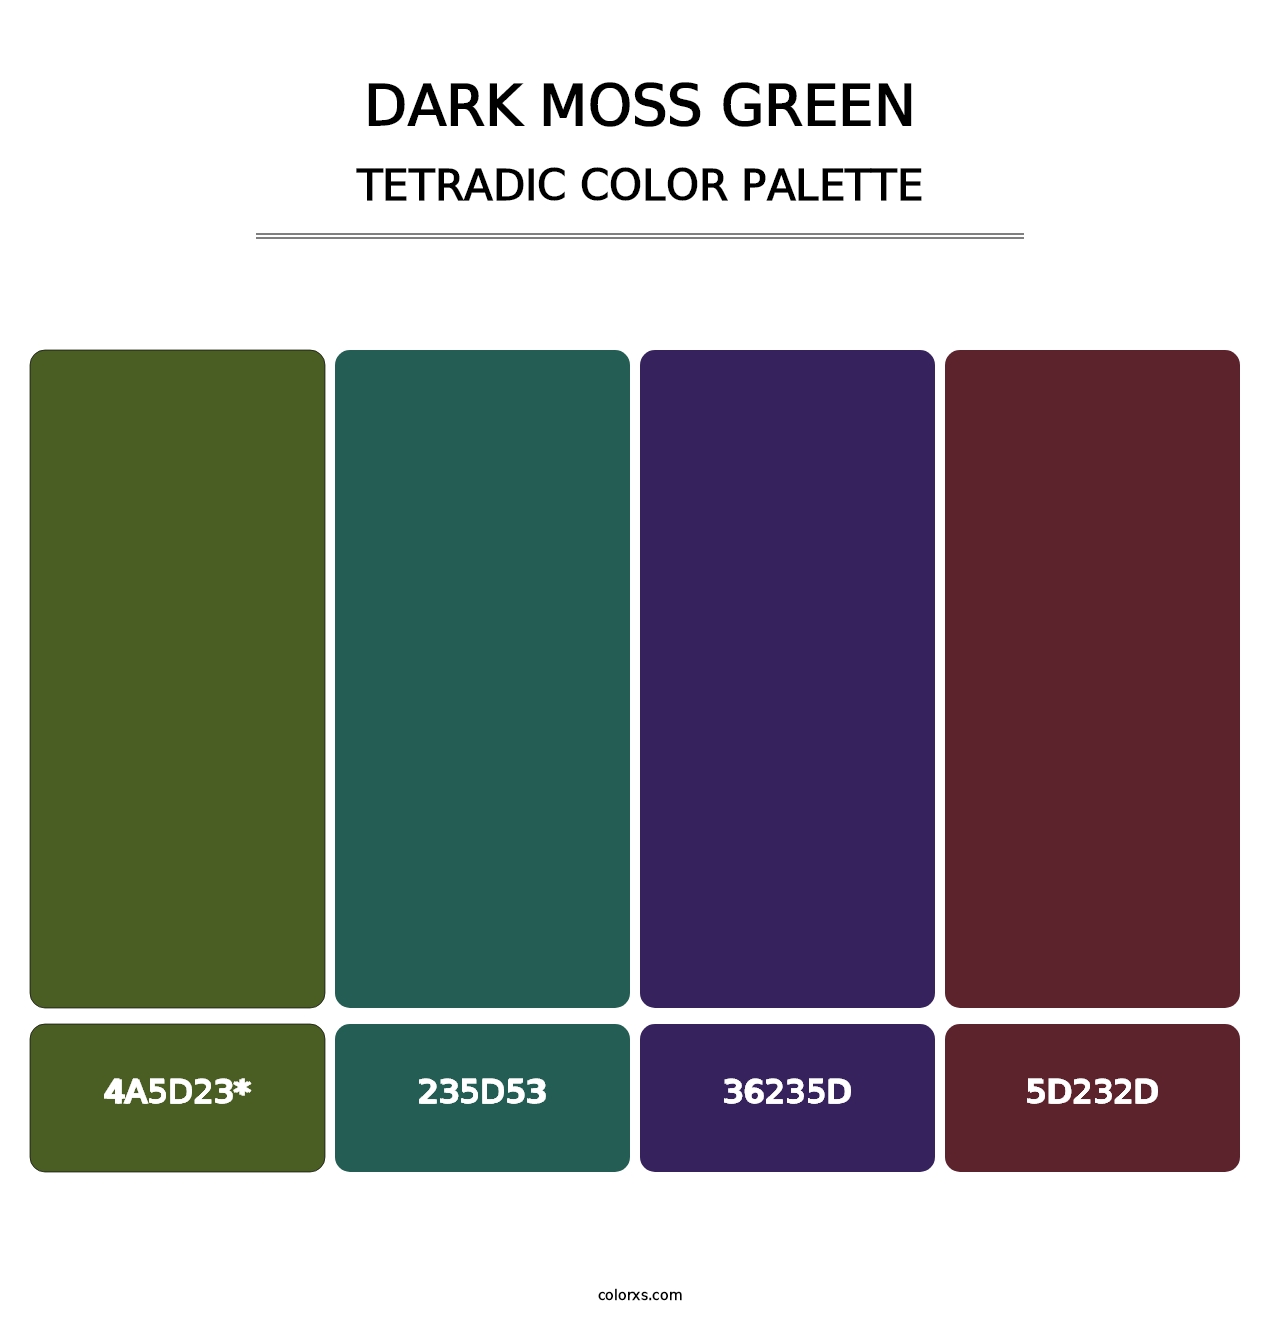 Dark Moss Green - Tetradic Color Palette